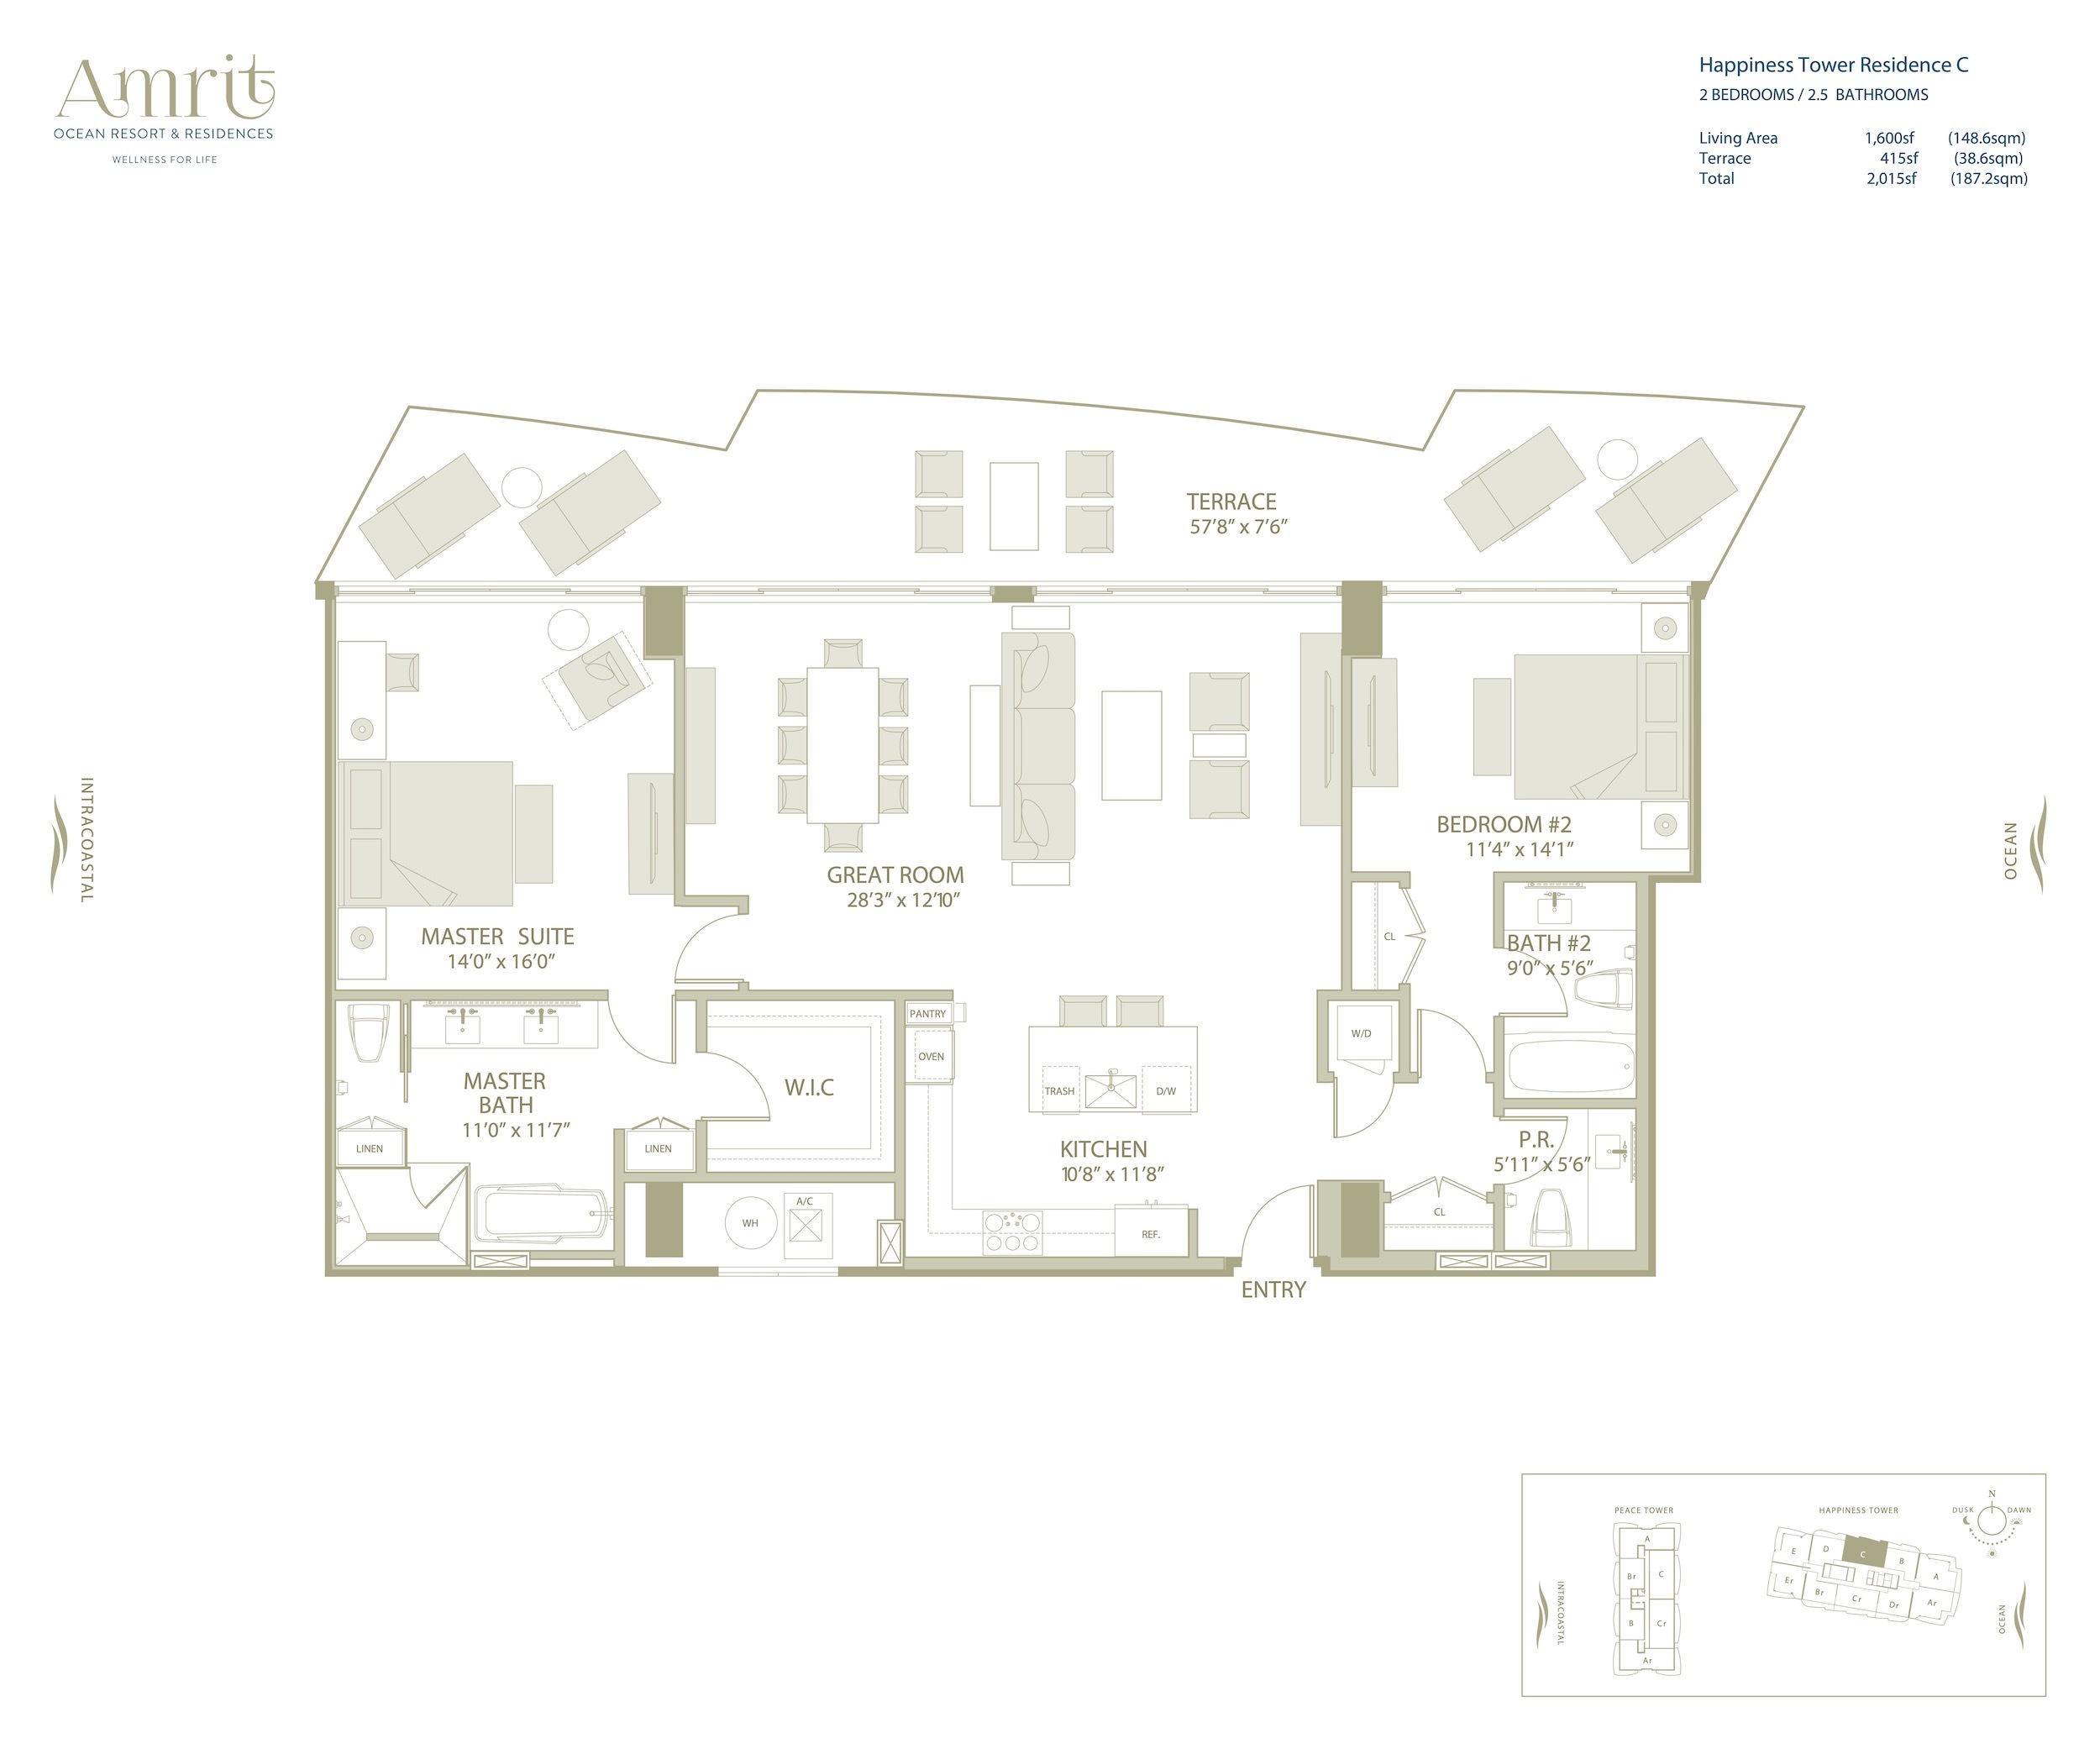 Floor Plan for Amrit Floorplans, Happiness Tower Residence C